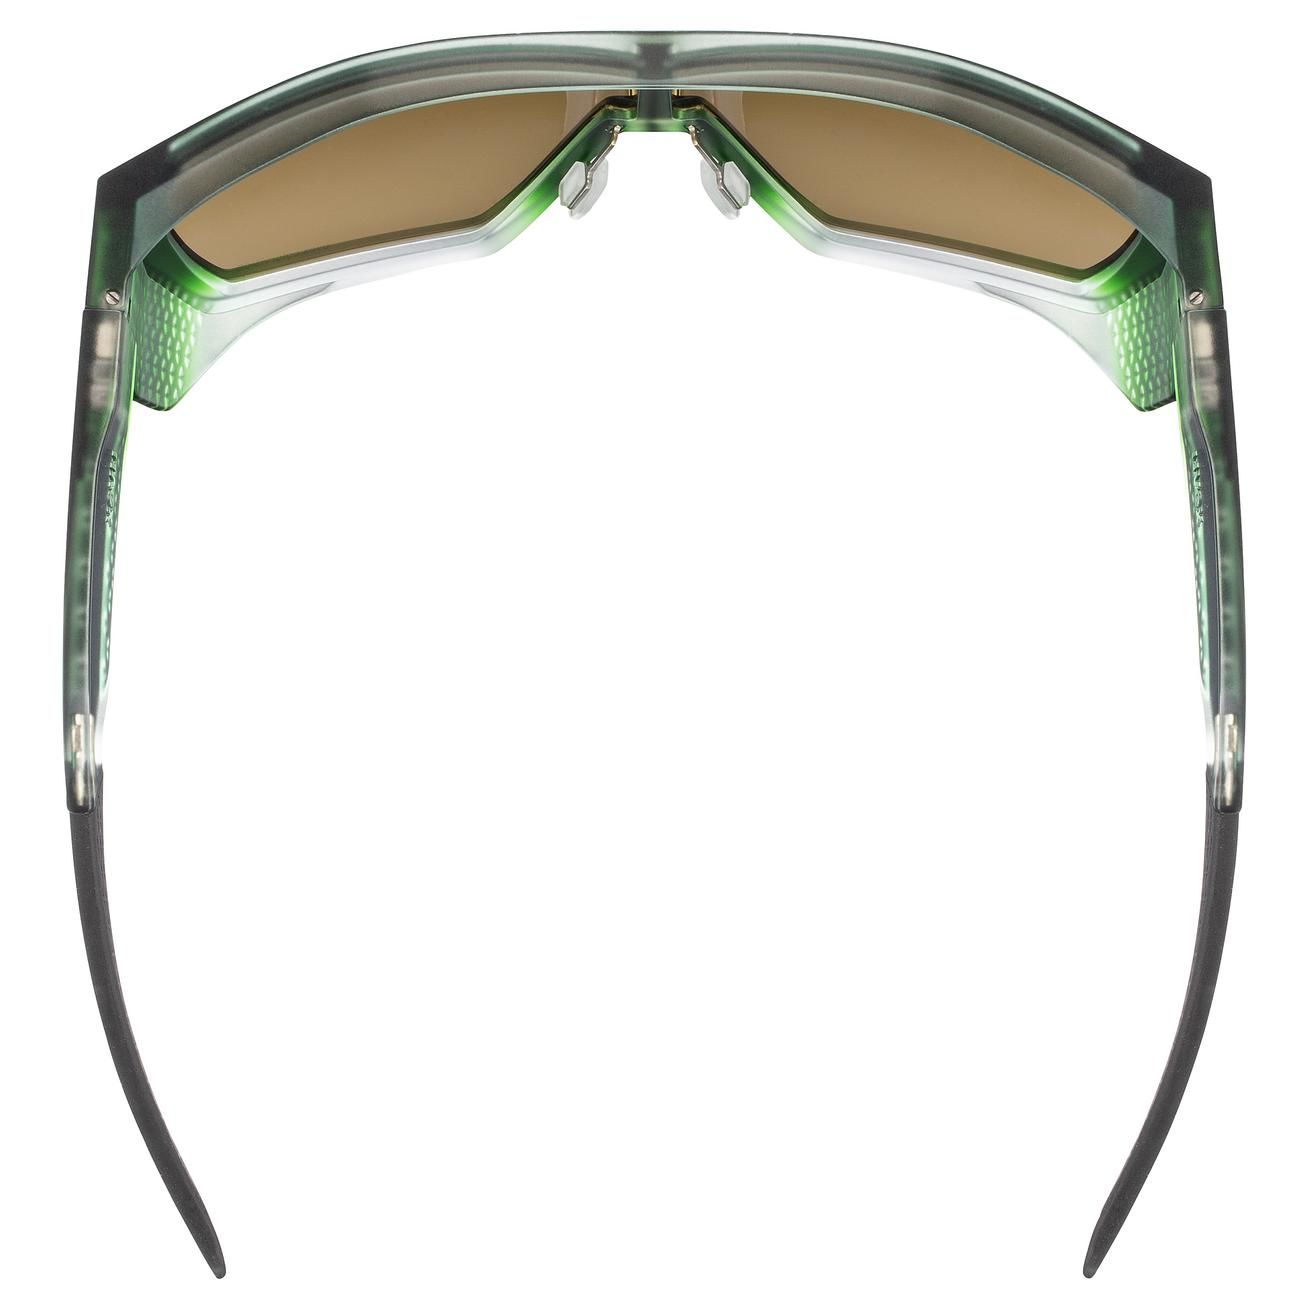 slnečné okuliare uvex mtn style CV green mat fade s3